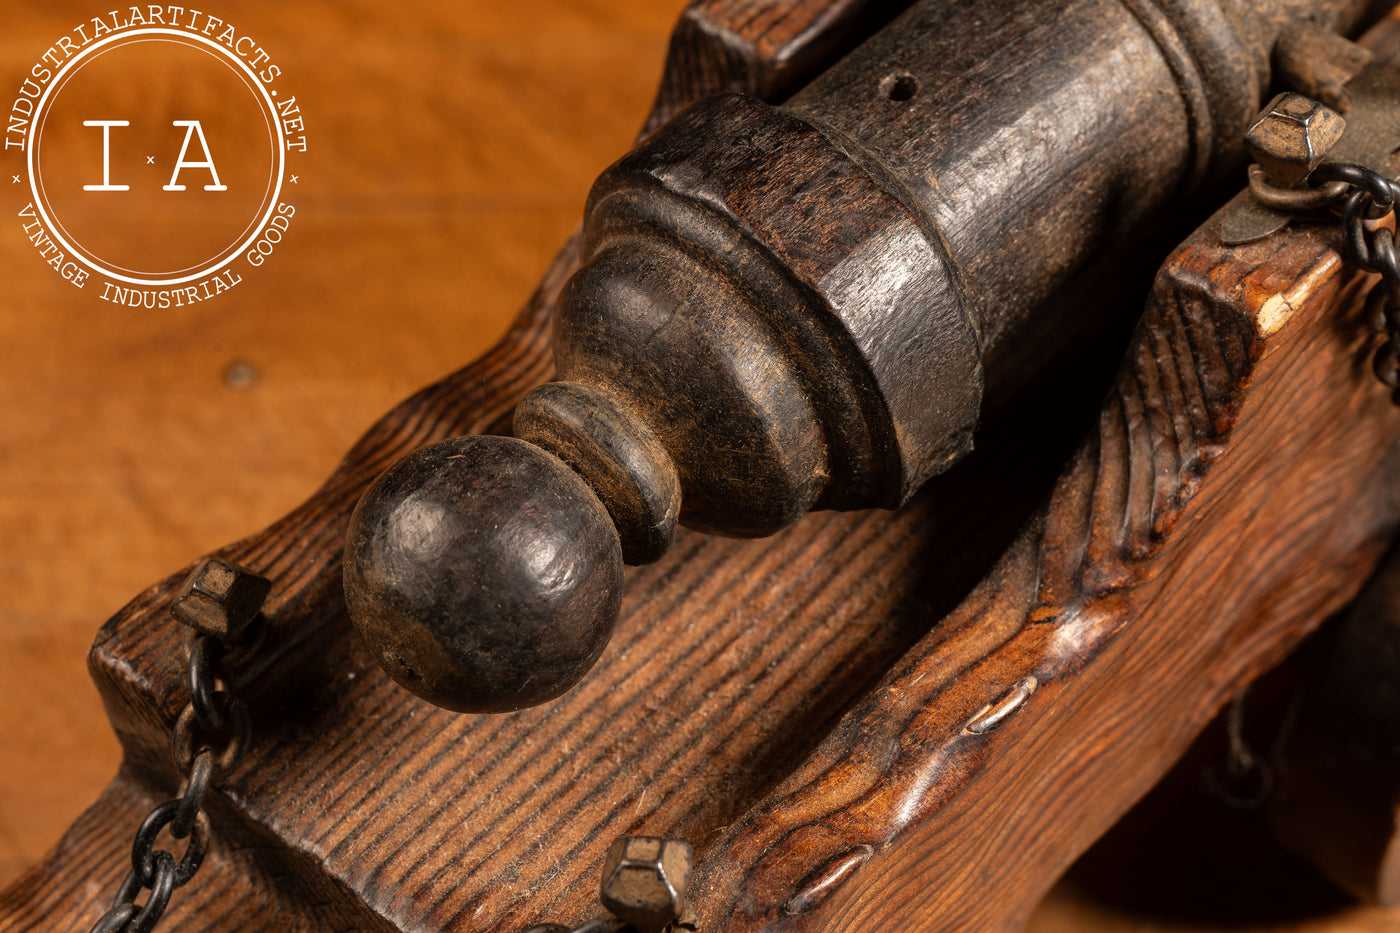 Vintage Carved Wooden Cannon